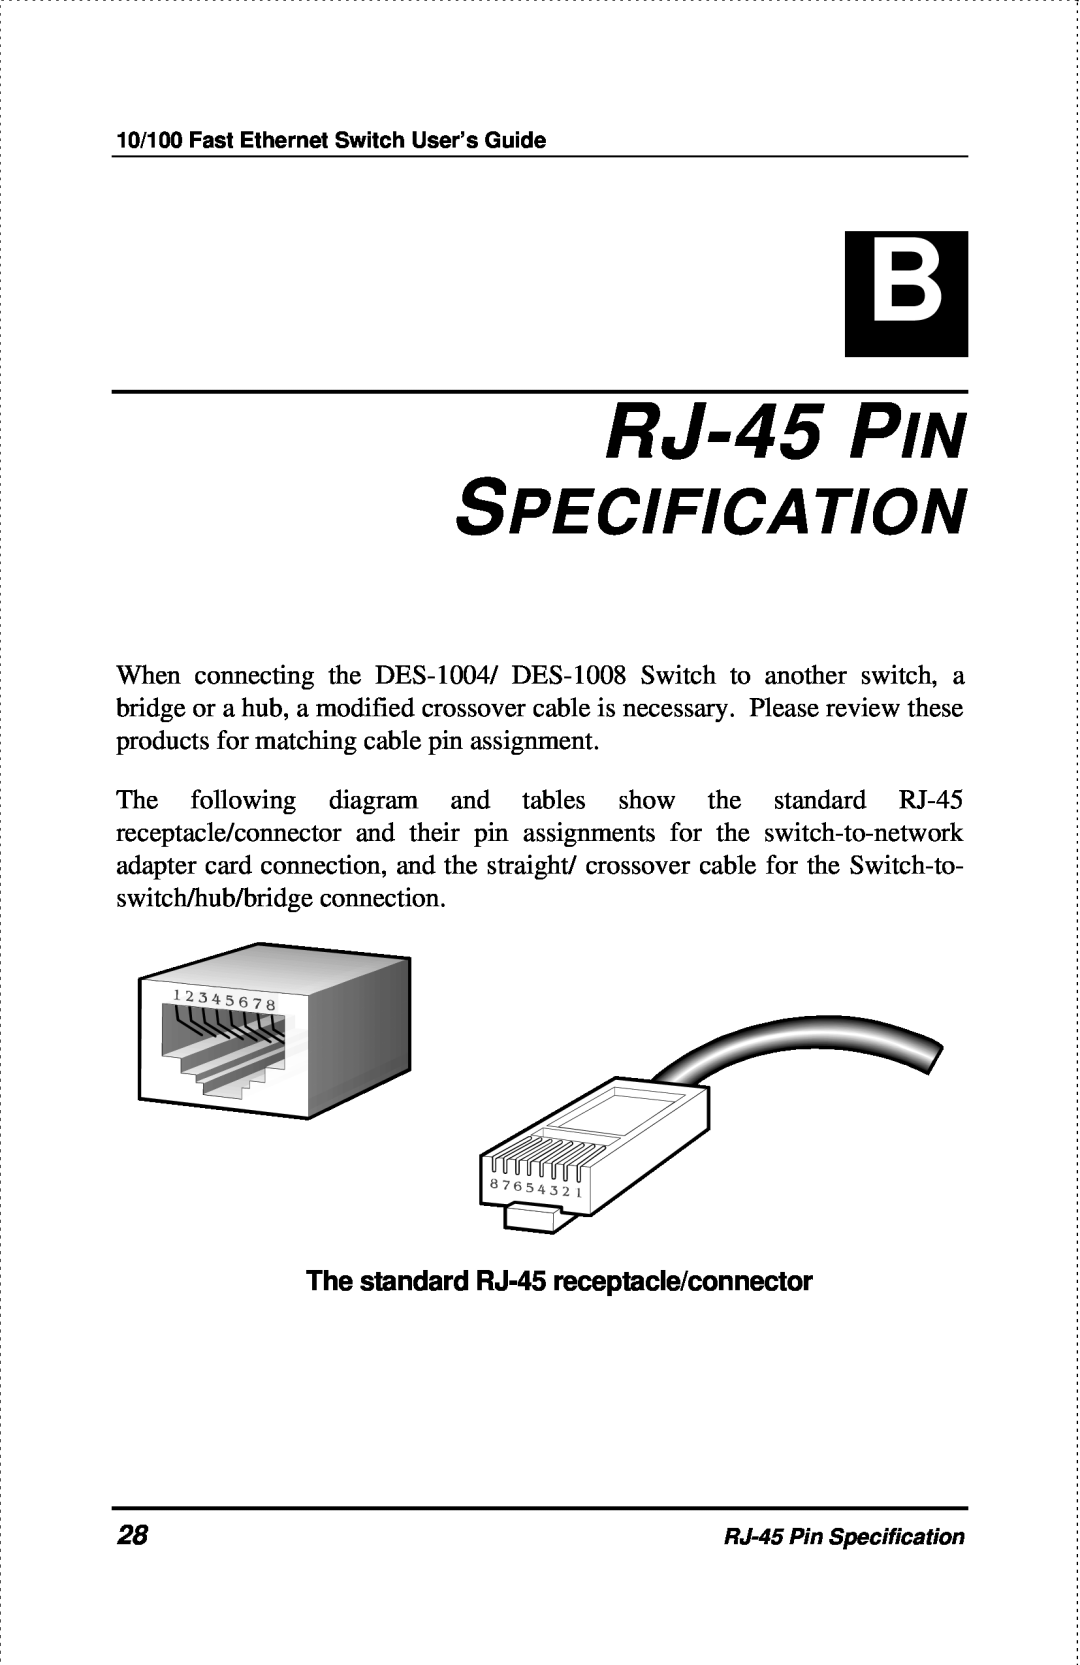 D-Link DES-1004 manual Specification, 6 RJ-45 PIN 